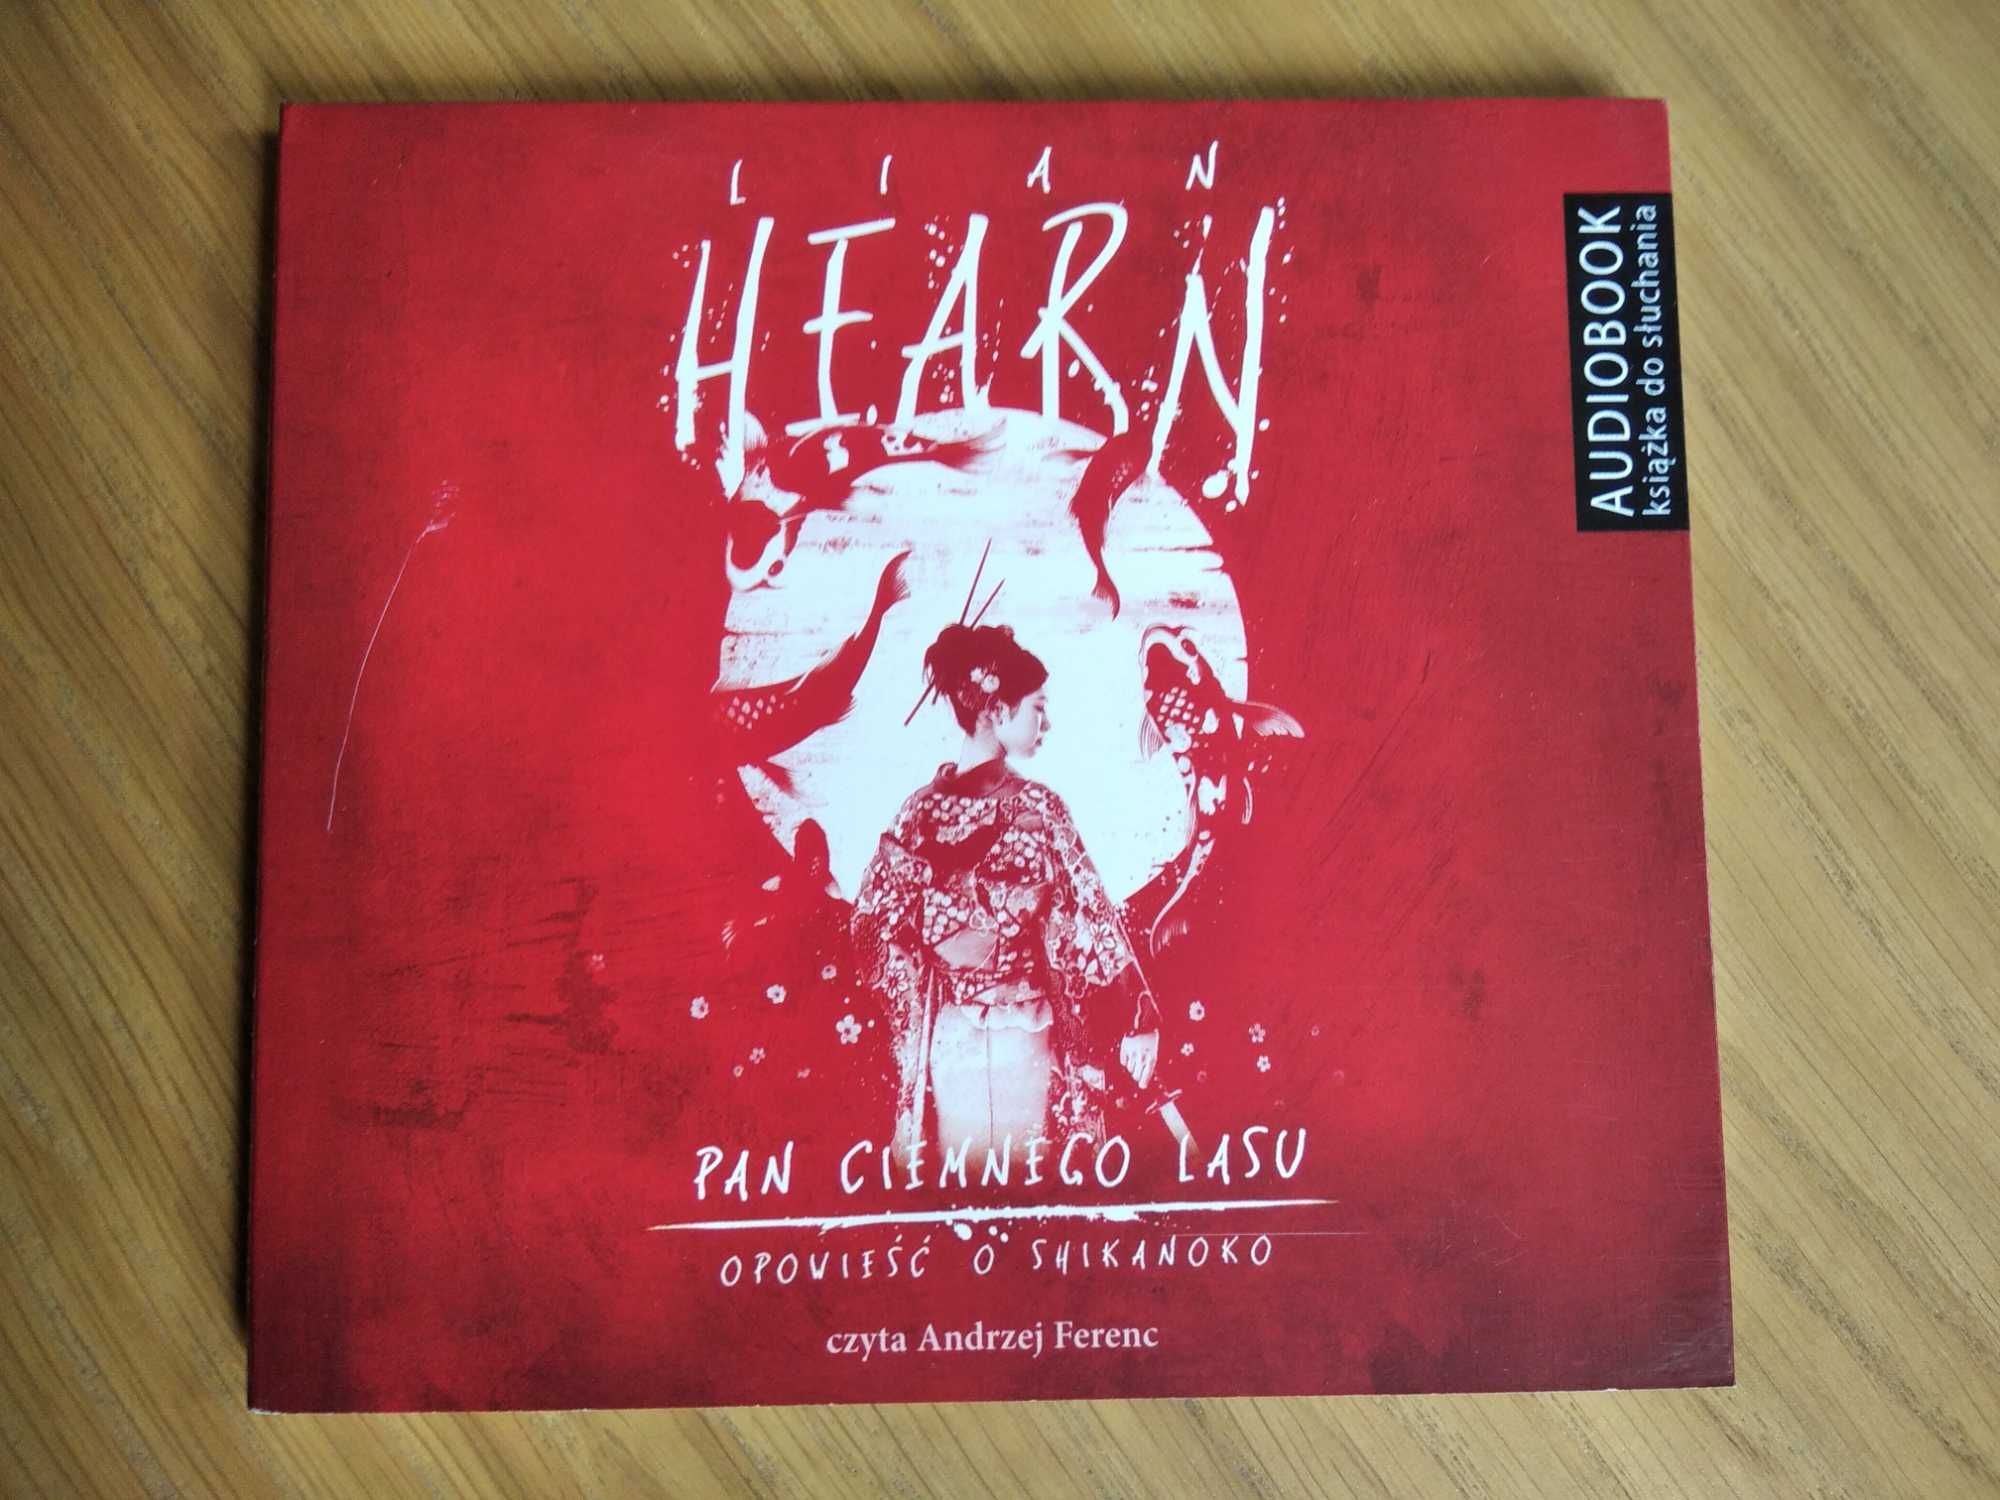 Lian Hearn - Cesarz ośmiu wysp + Pan Ciemnego Lasu -2x audiobook (2CD)